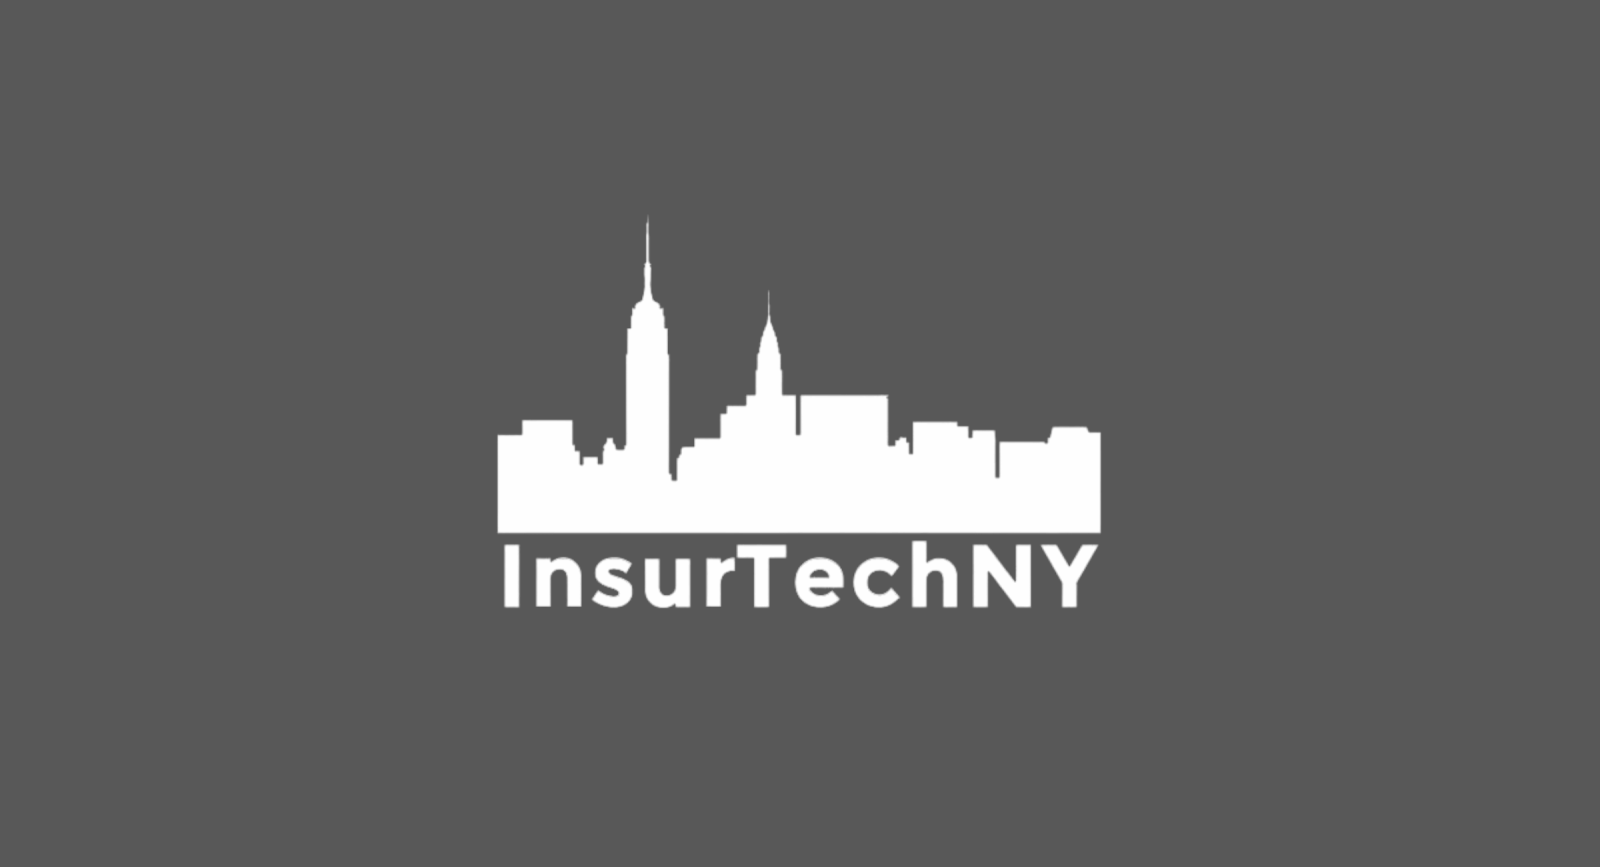 Insurtech NY Cover Image